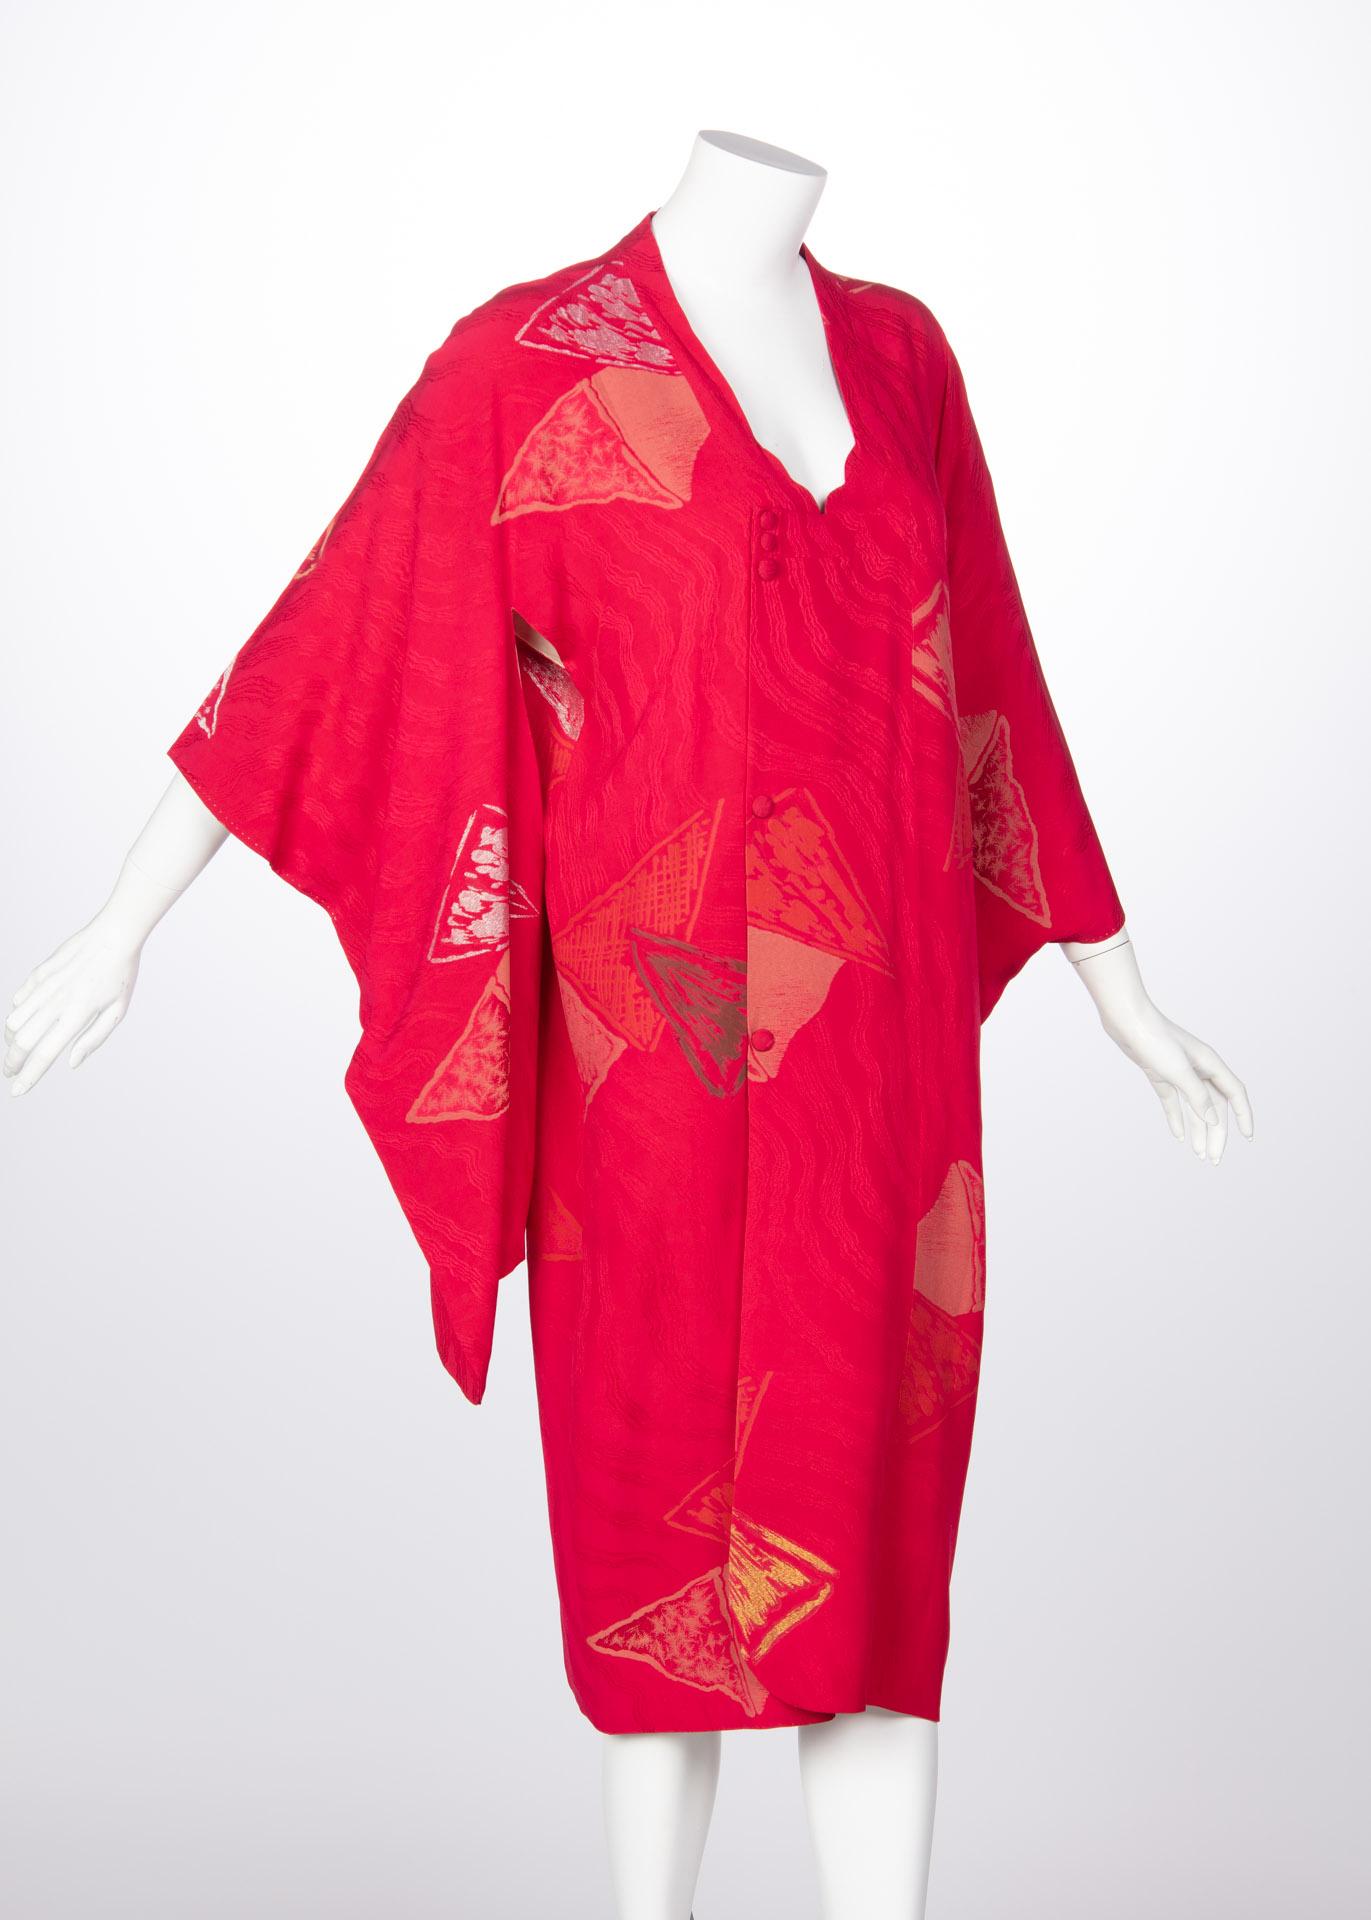 Women's Vintage Japanese Silk Magenta Metallic Michiyuki Kimono Jacket Dress